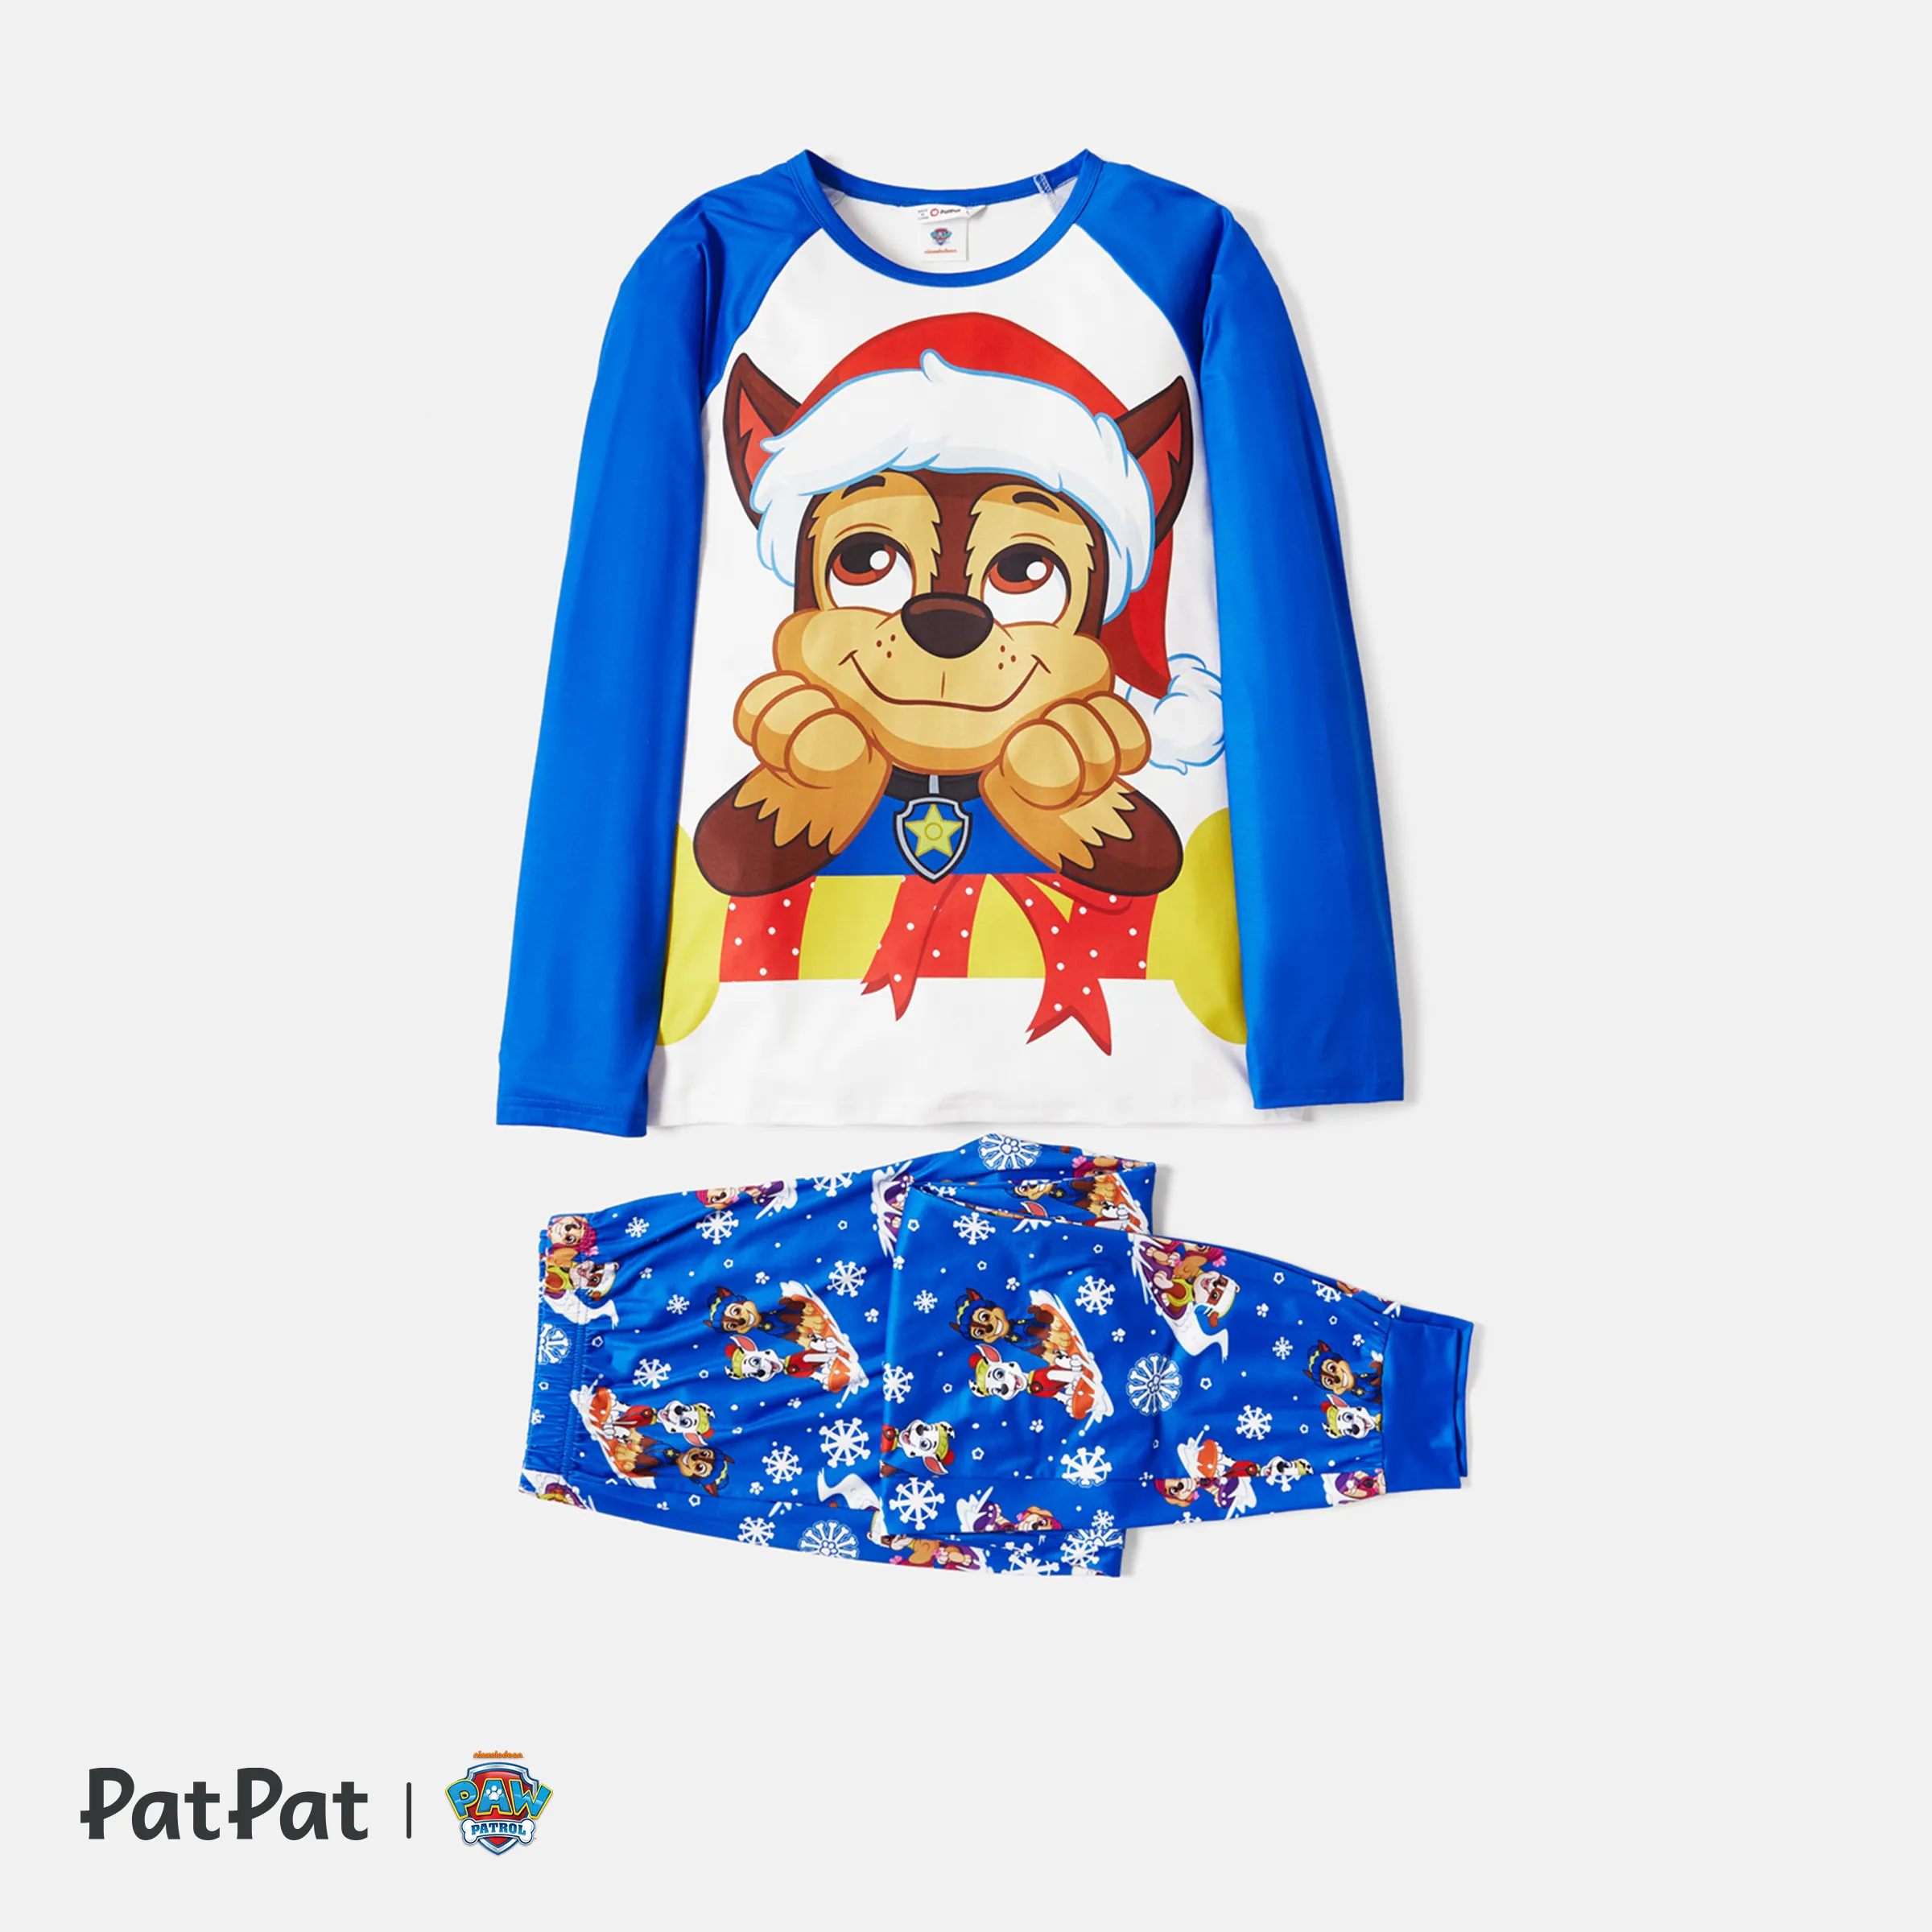 PAW Patrol Big Graphic Christmas Family Matching Pajamas Sets (résistant Aux Flammes)